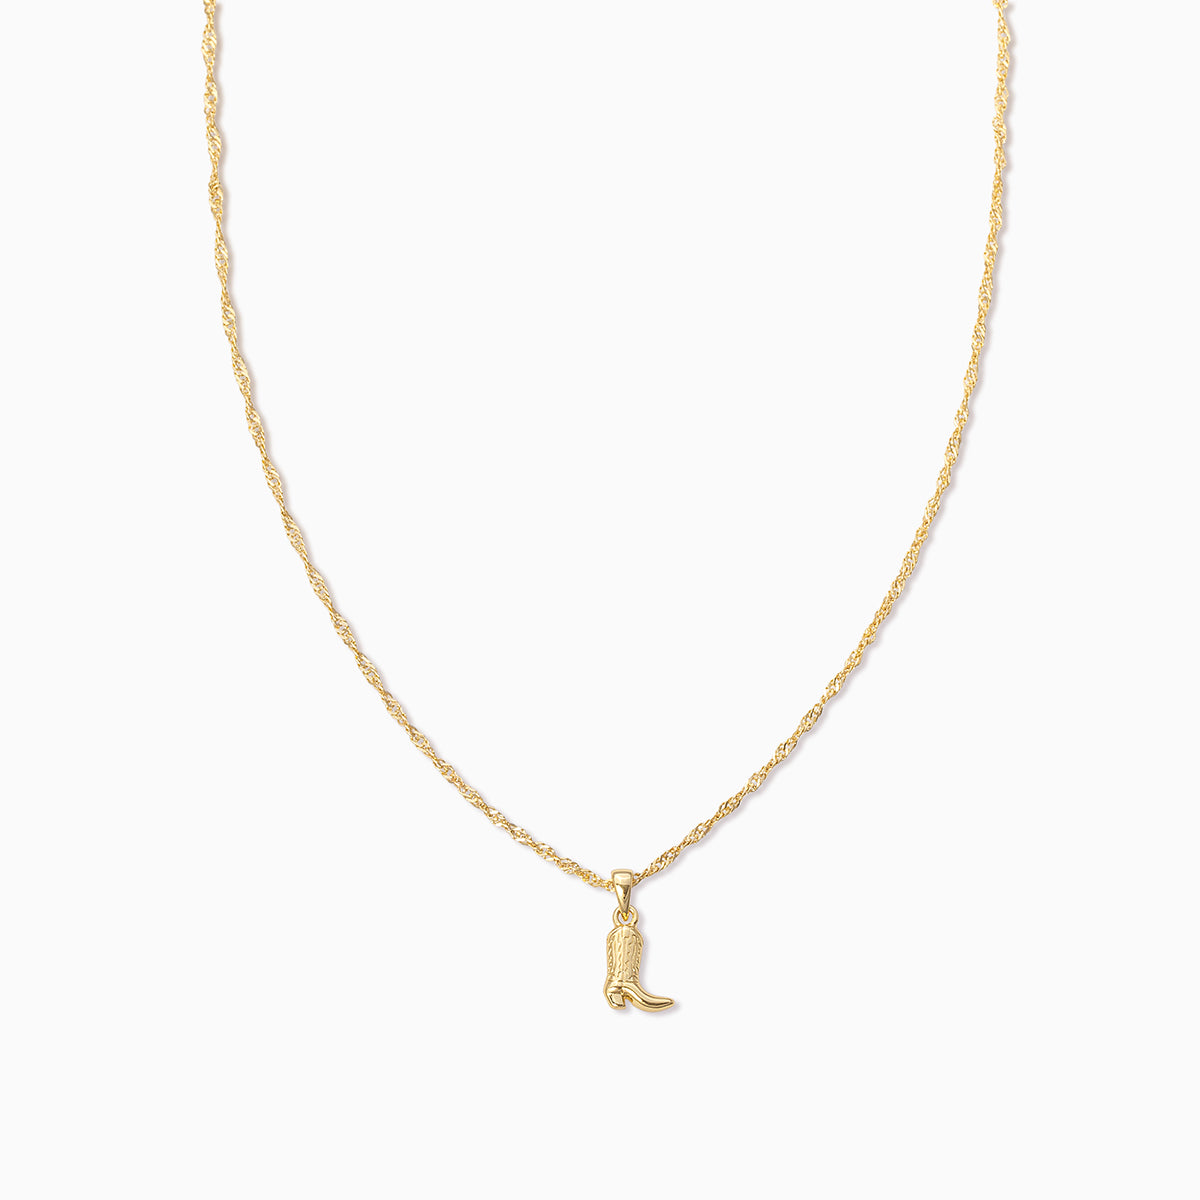 Cowboy Boot Pendant Necklace | Gold | Product Image | Uncommon James